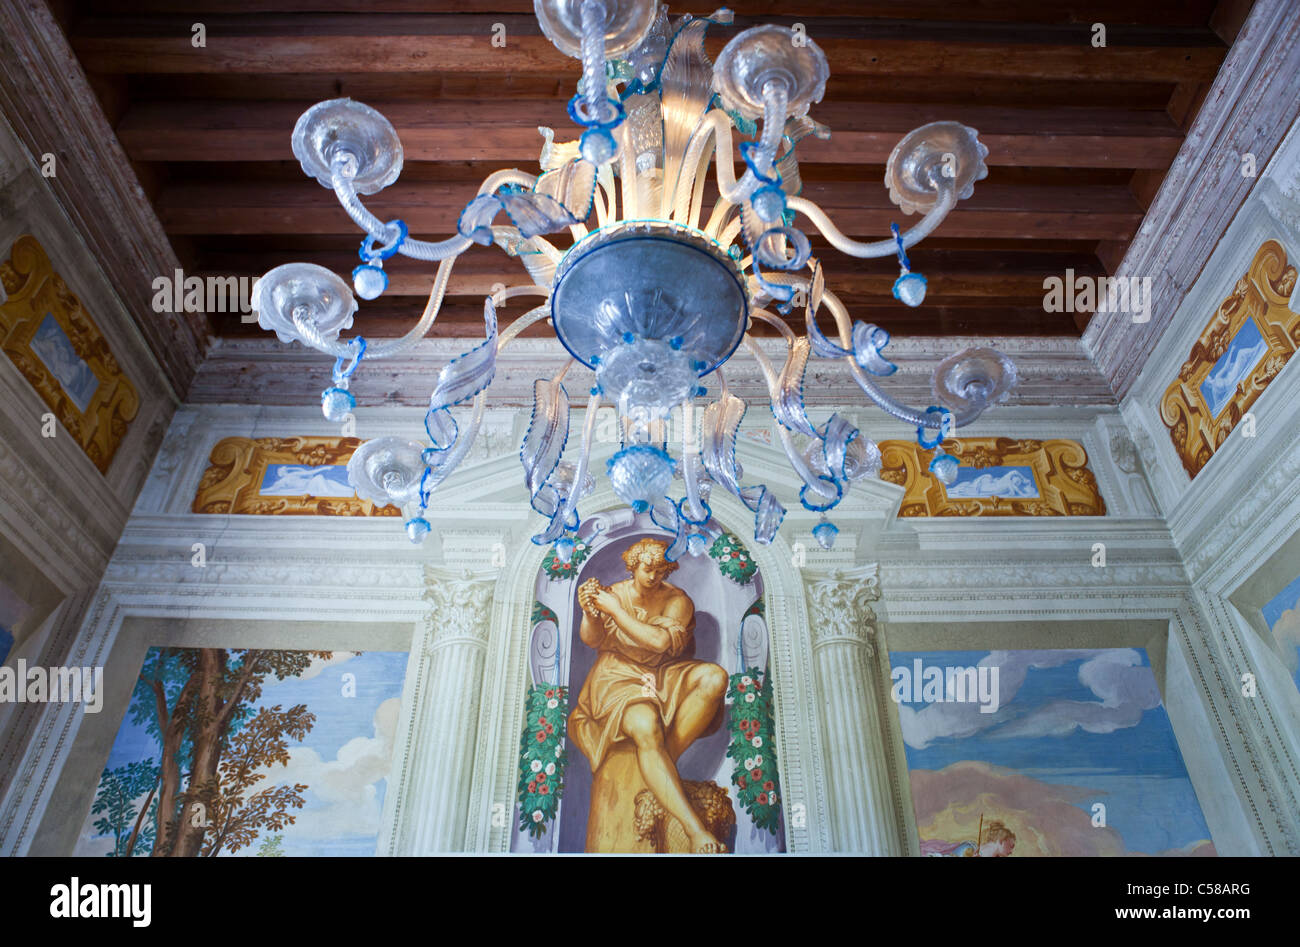 L'Italie, Vénétie, Fanzolo di Vedelago, fresques de Battista Zelotti Villa Emo en salles, architecte Andrea Palladio. Banque D'Images